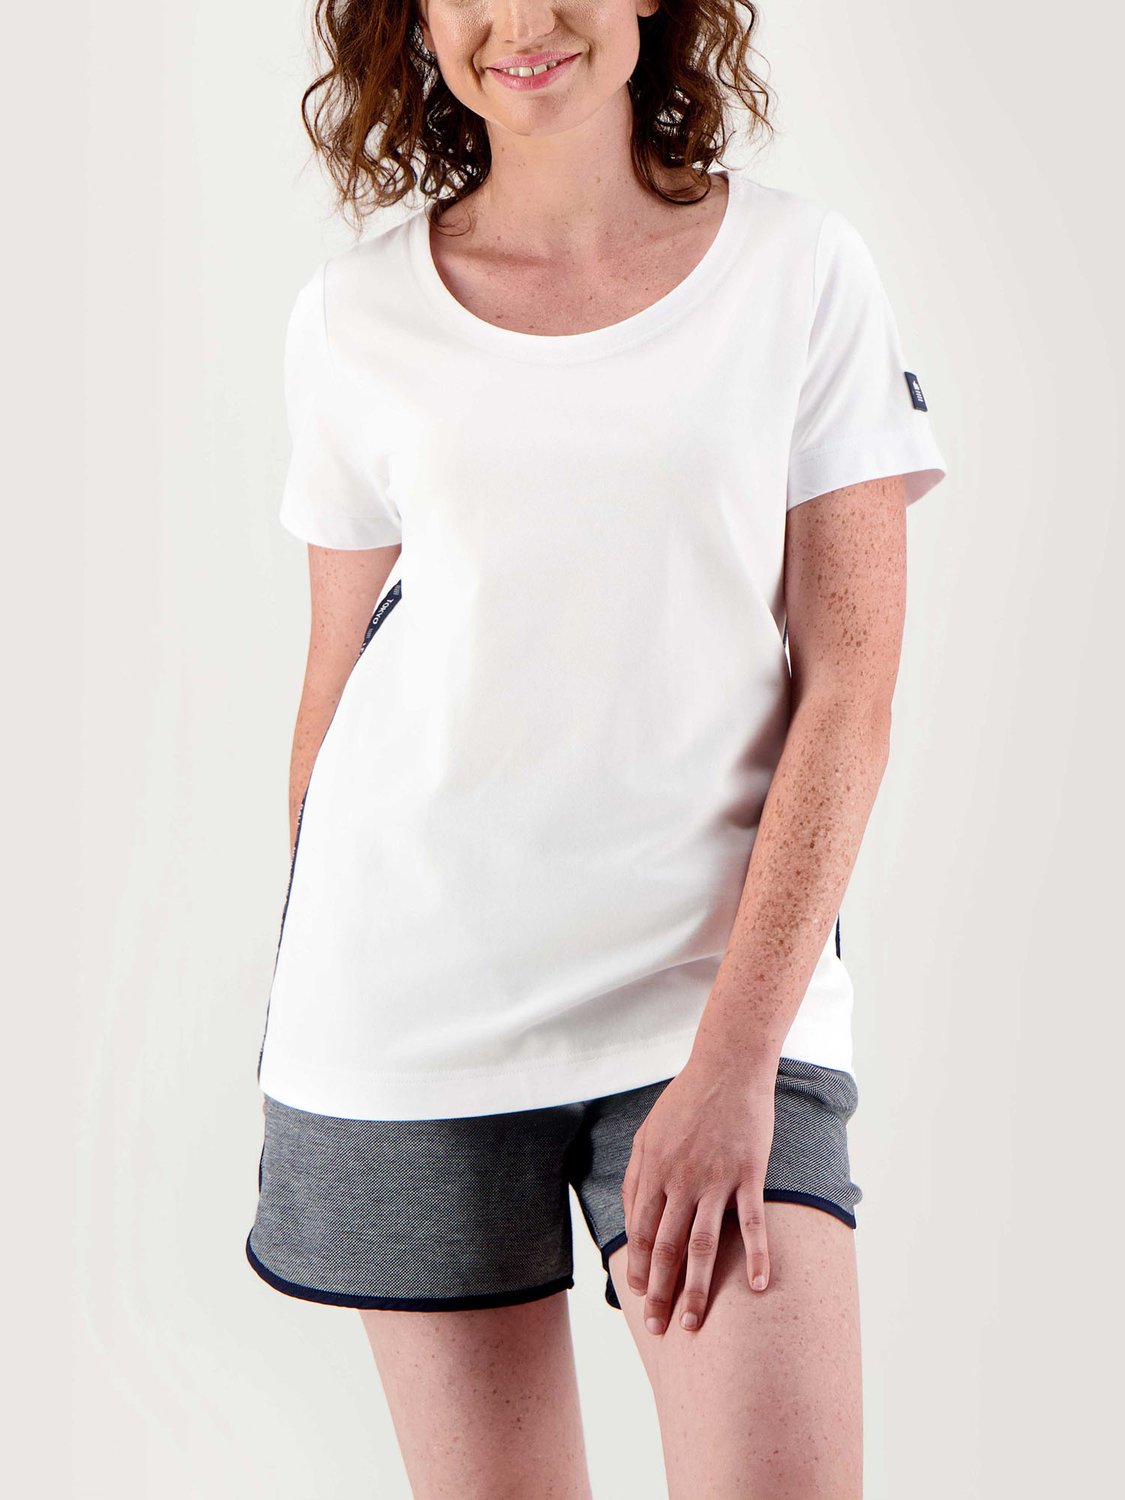 Tee Shirt Femme Pratique Sportive Blanc